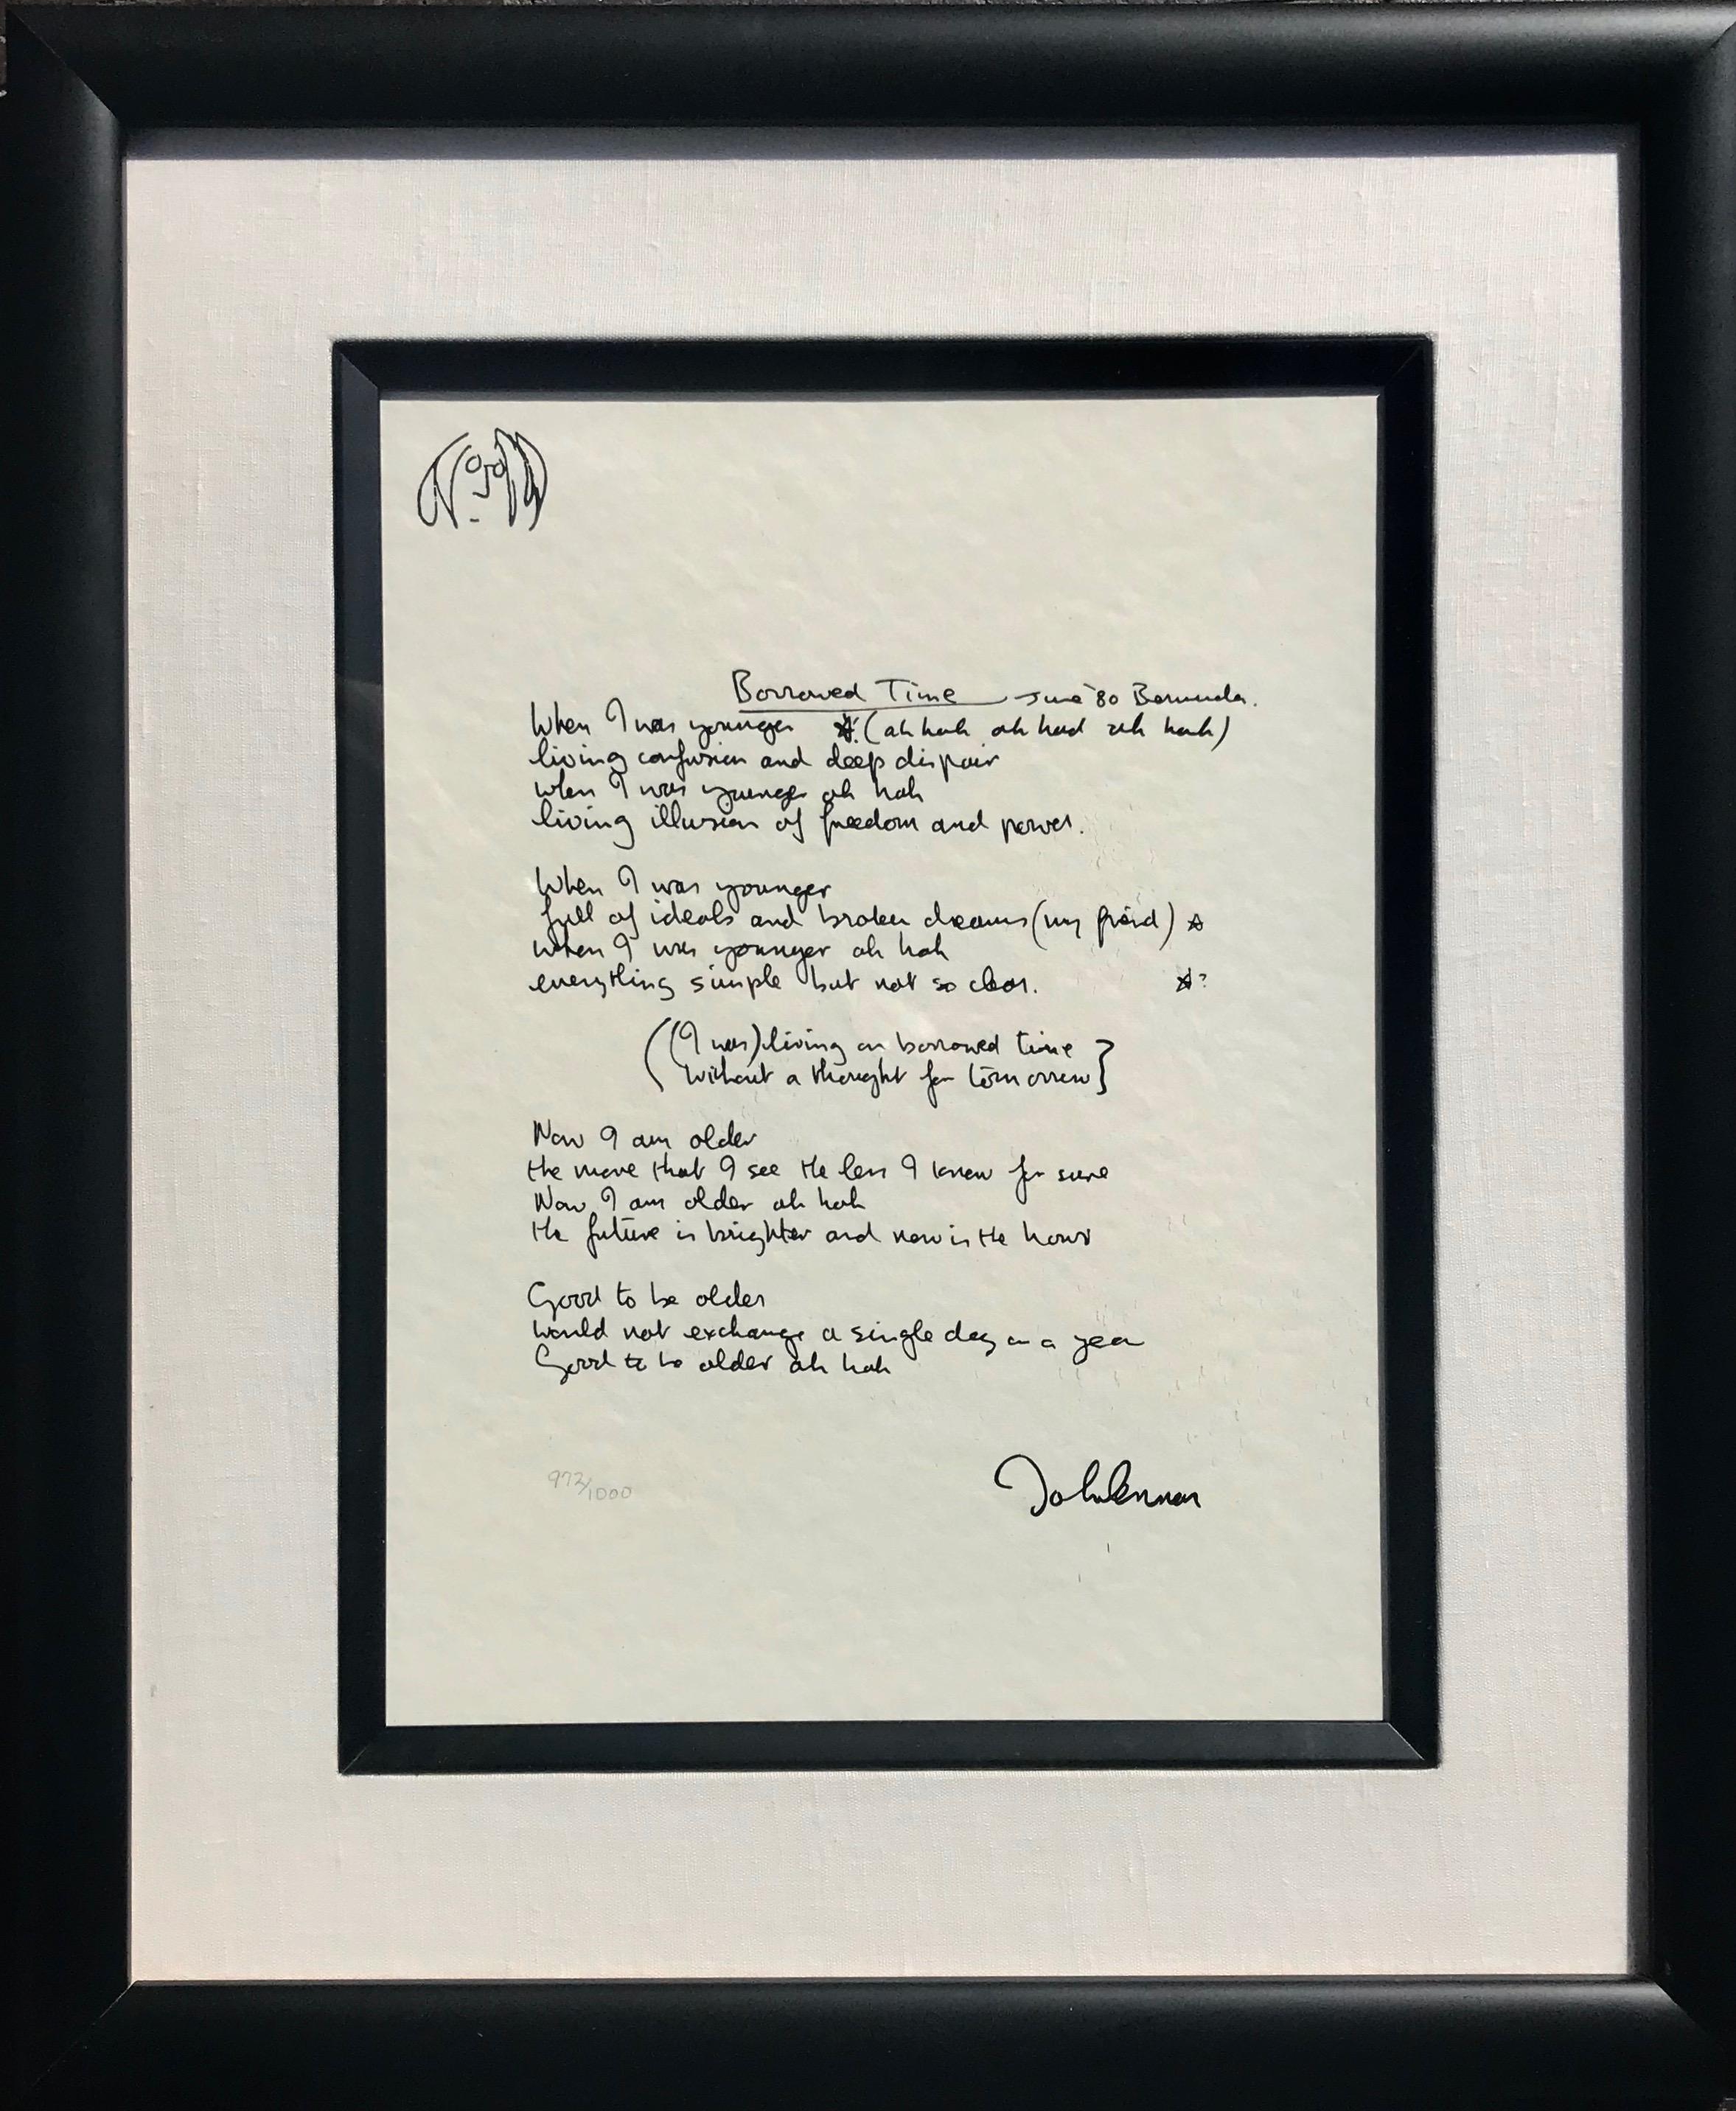 John Lennon Print - "Borrowed Time" Limited Edition Hand Written Lyrics